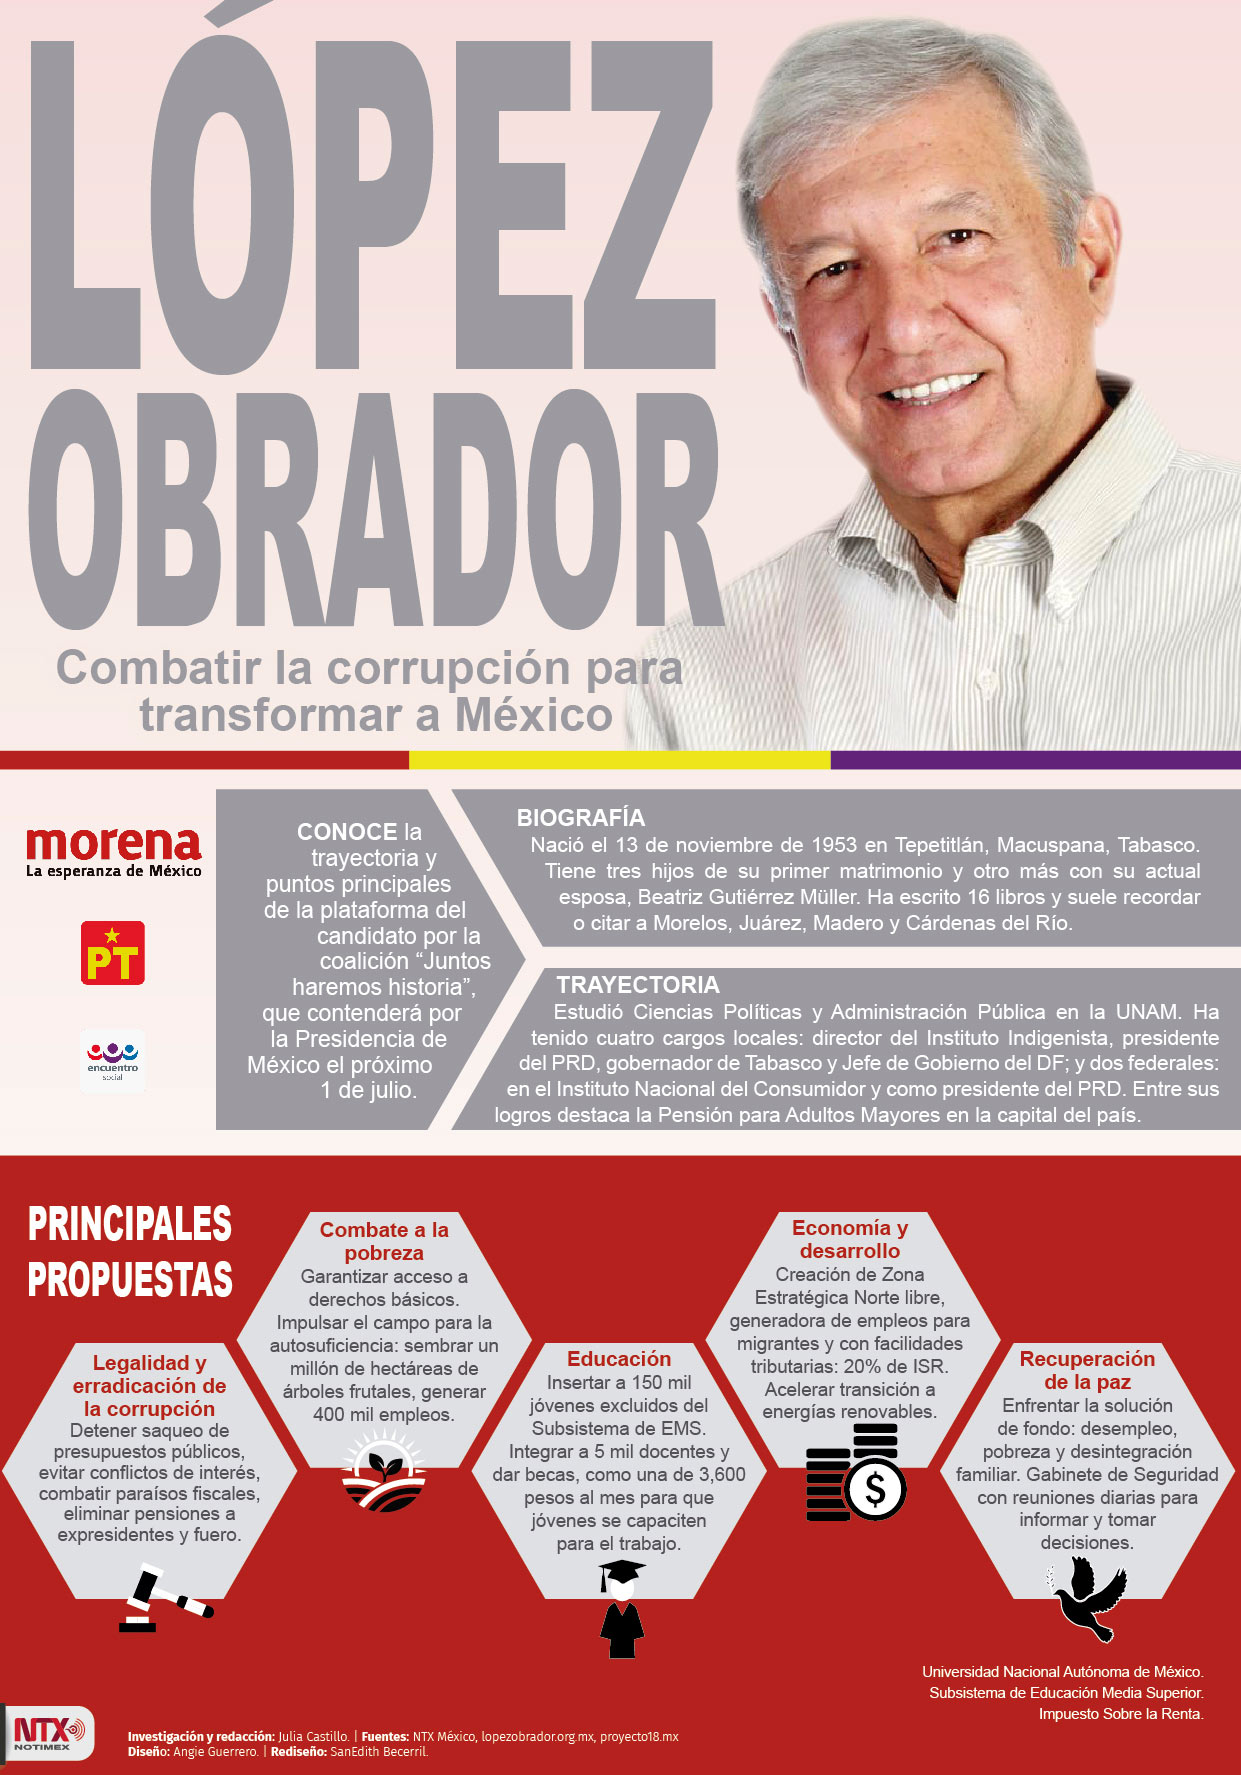 Lpez Obrador, combatir la corrupcin para transformar a Mxico